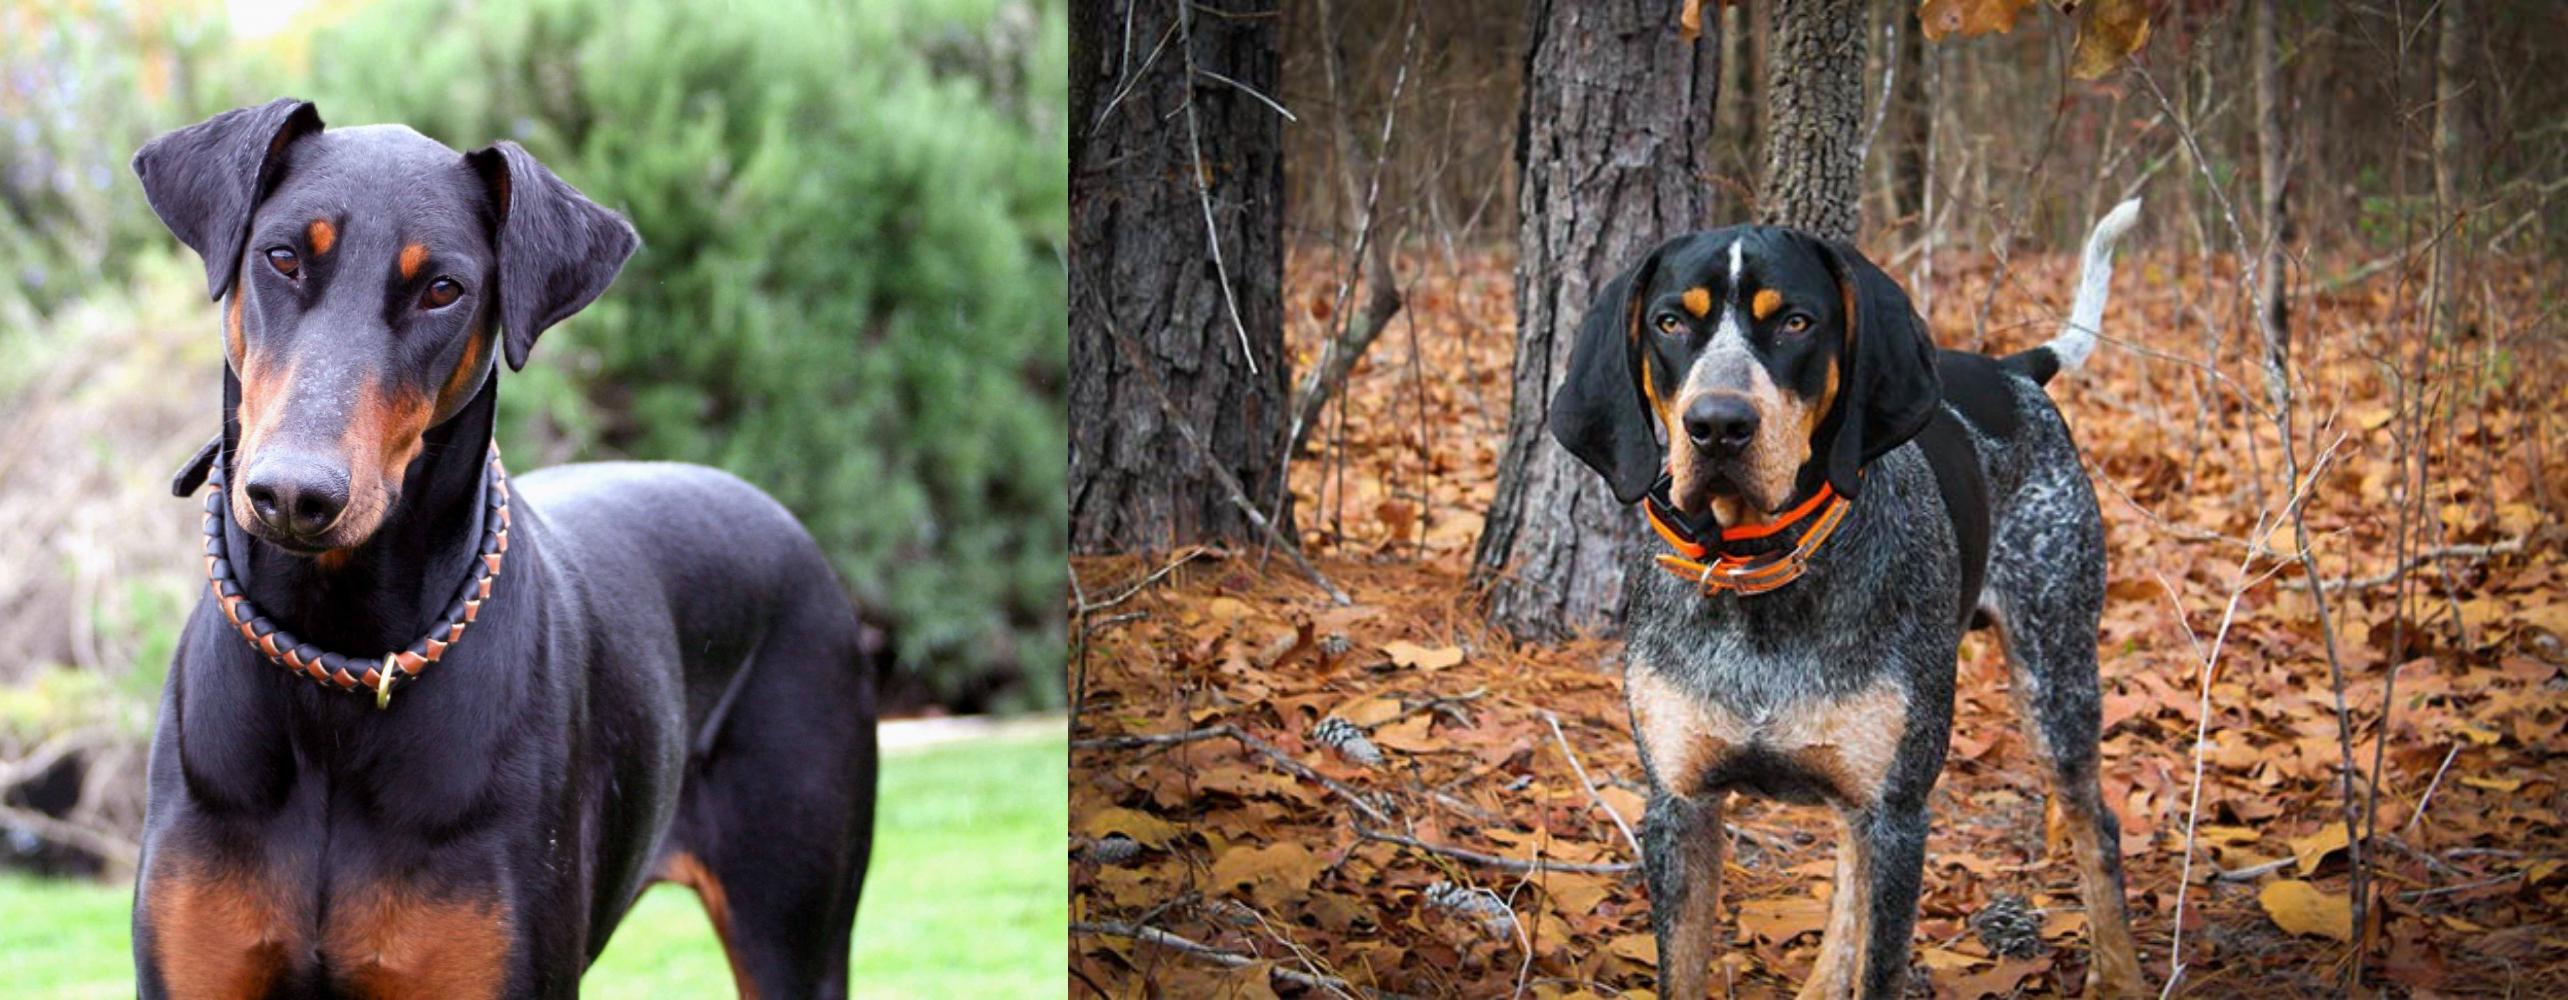 Doberman Pinscher is originated from Germany but Bluetick Coonhound is orig...